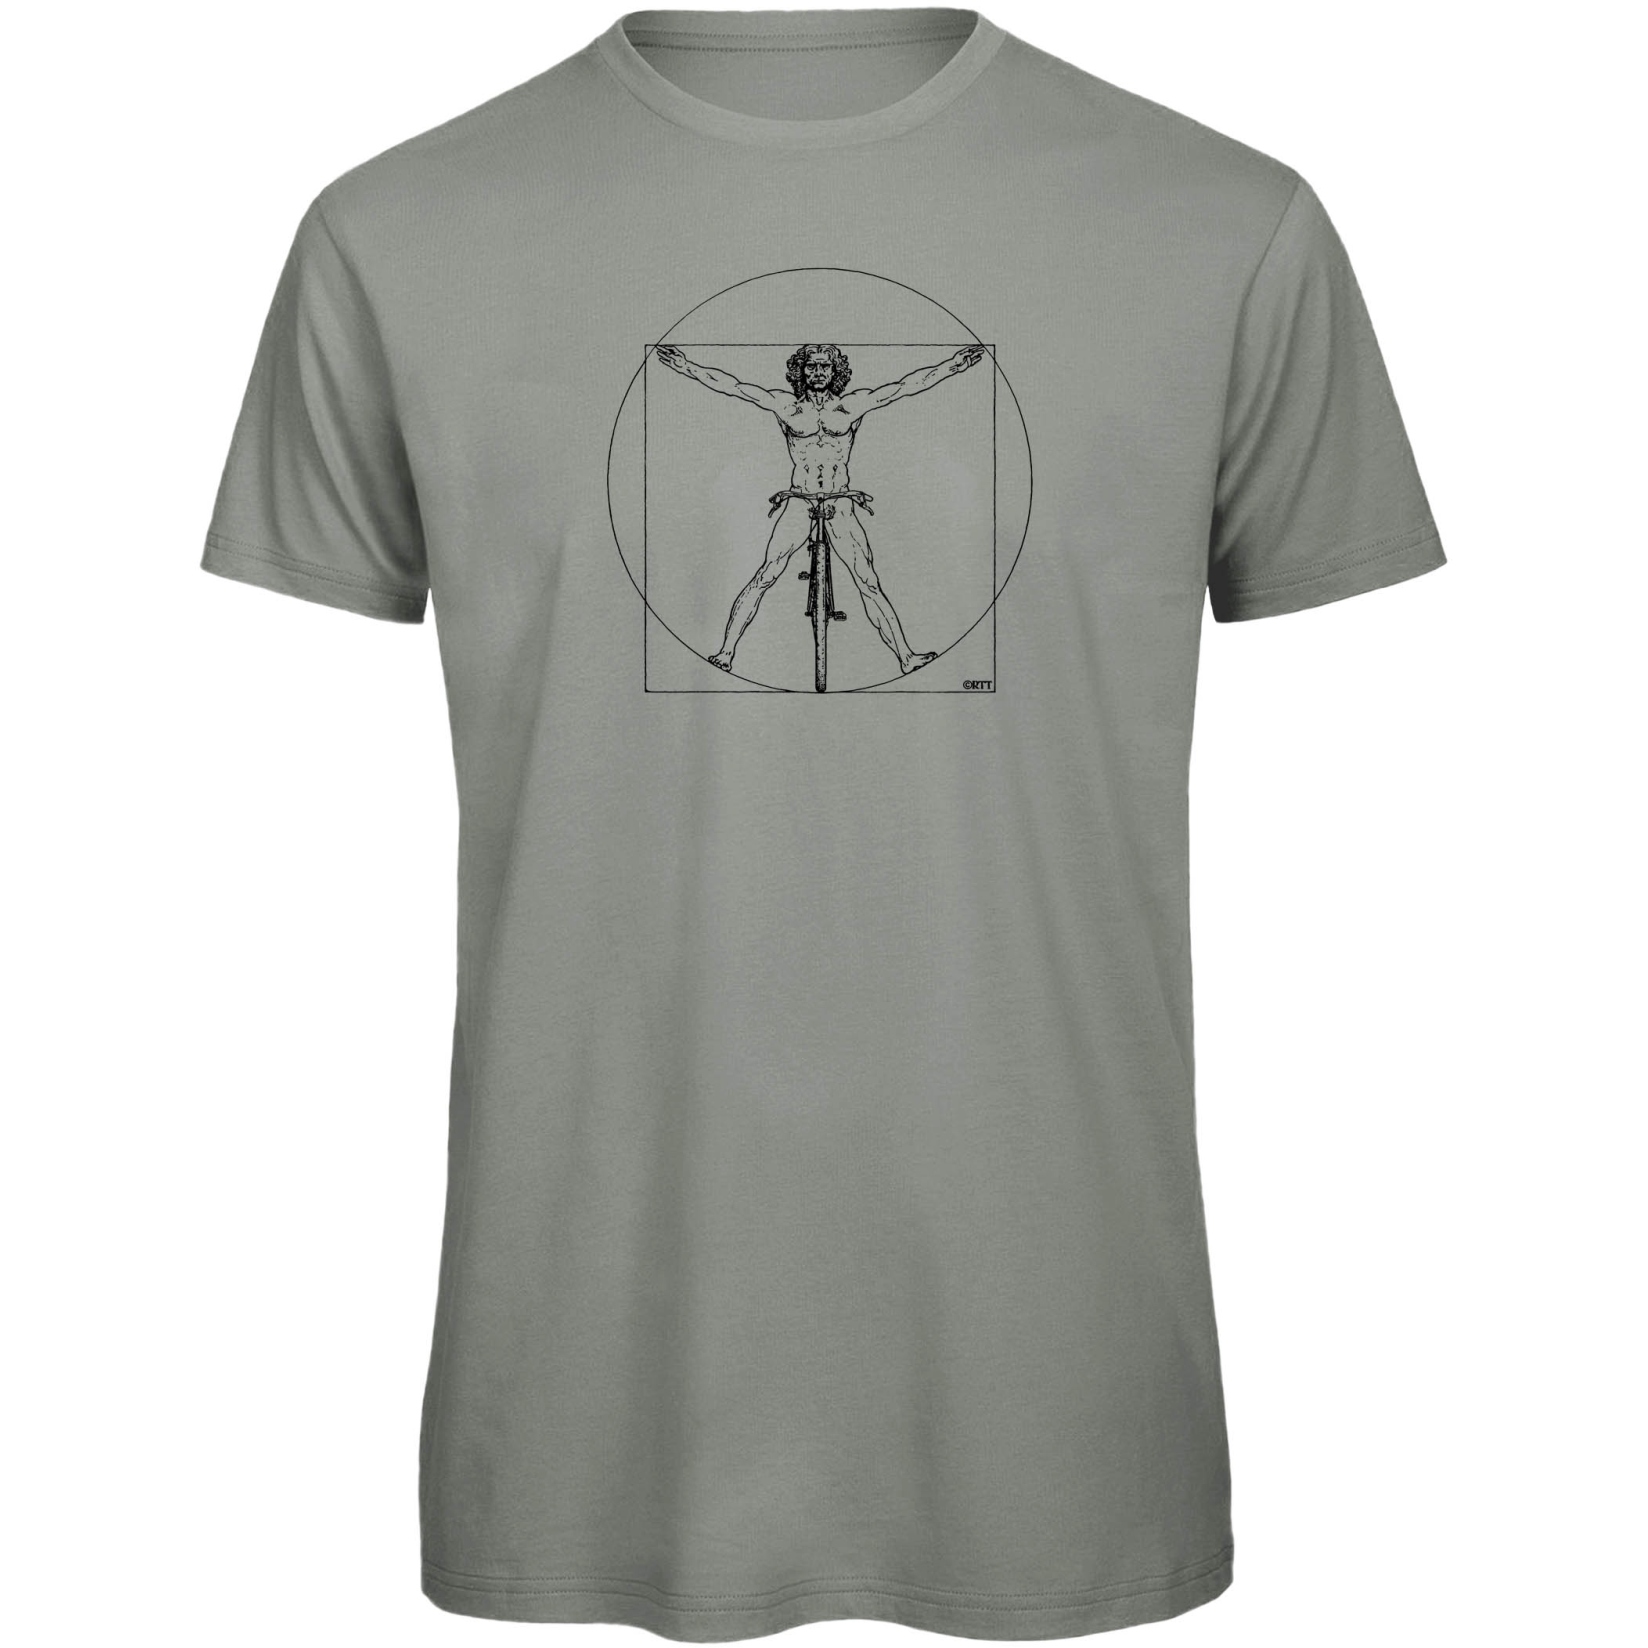 Productfoto van RTTshirts Fiets T-Shirt - DaVinci - lichtgrijs